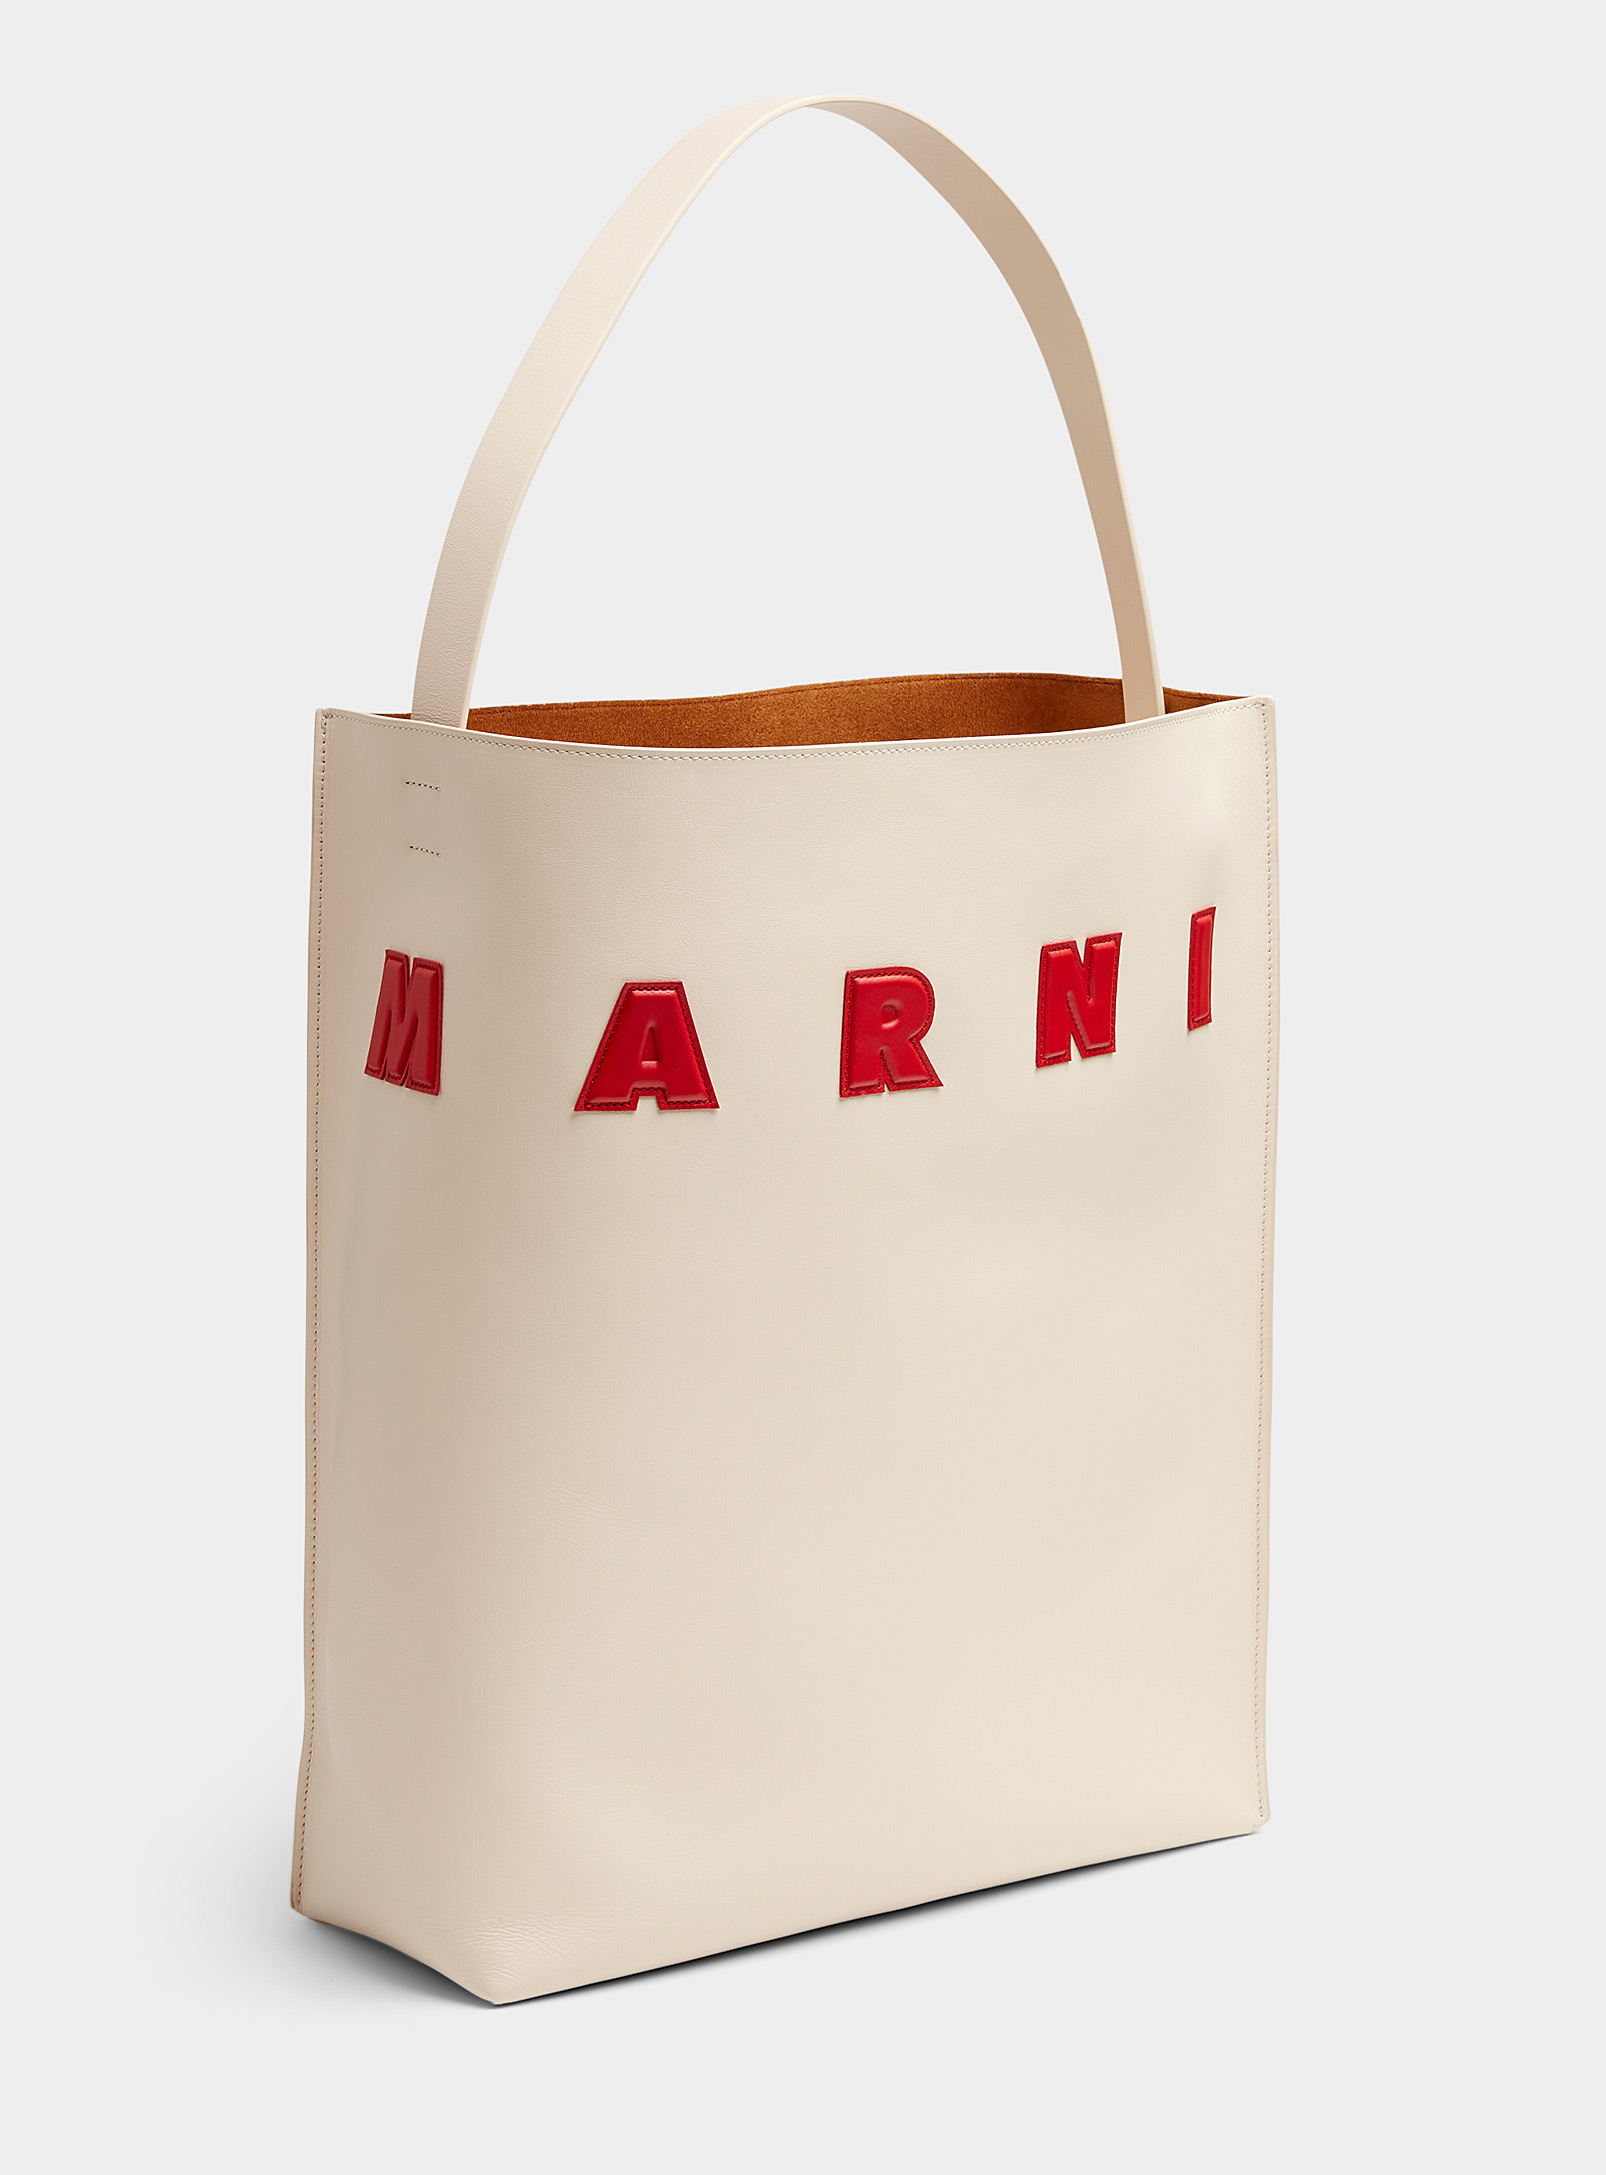 MARNI - Men's Large Museo soft bag